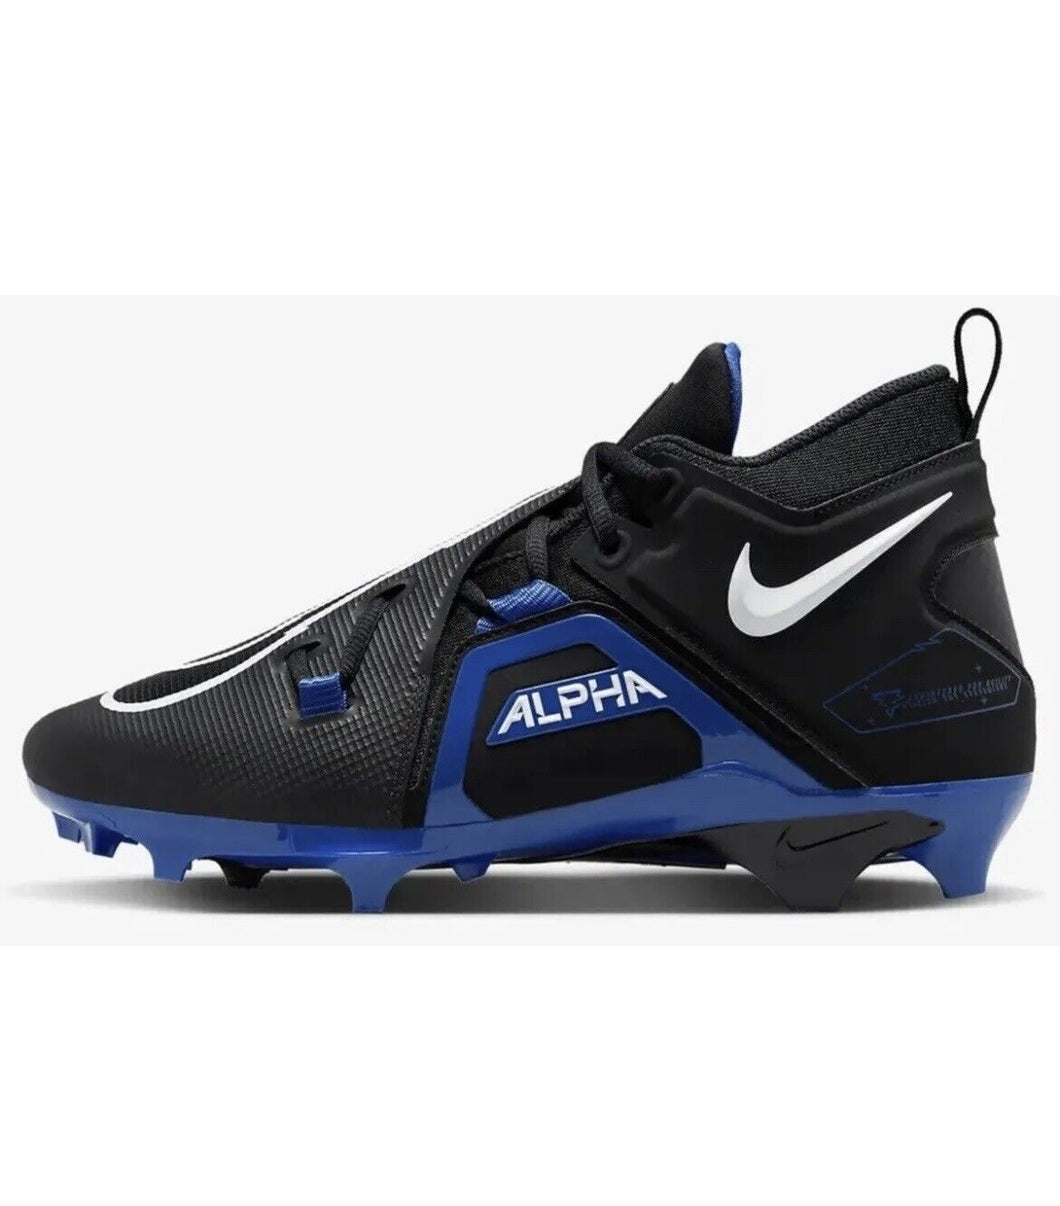 Nike Alpha Menace Pro 3 - Black/Royal (US 8.5, 9) - www.SportsTakeoff.com